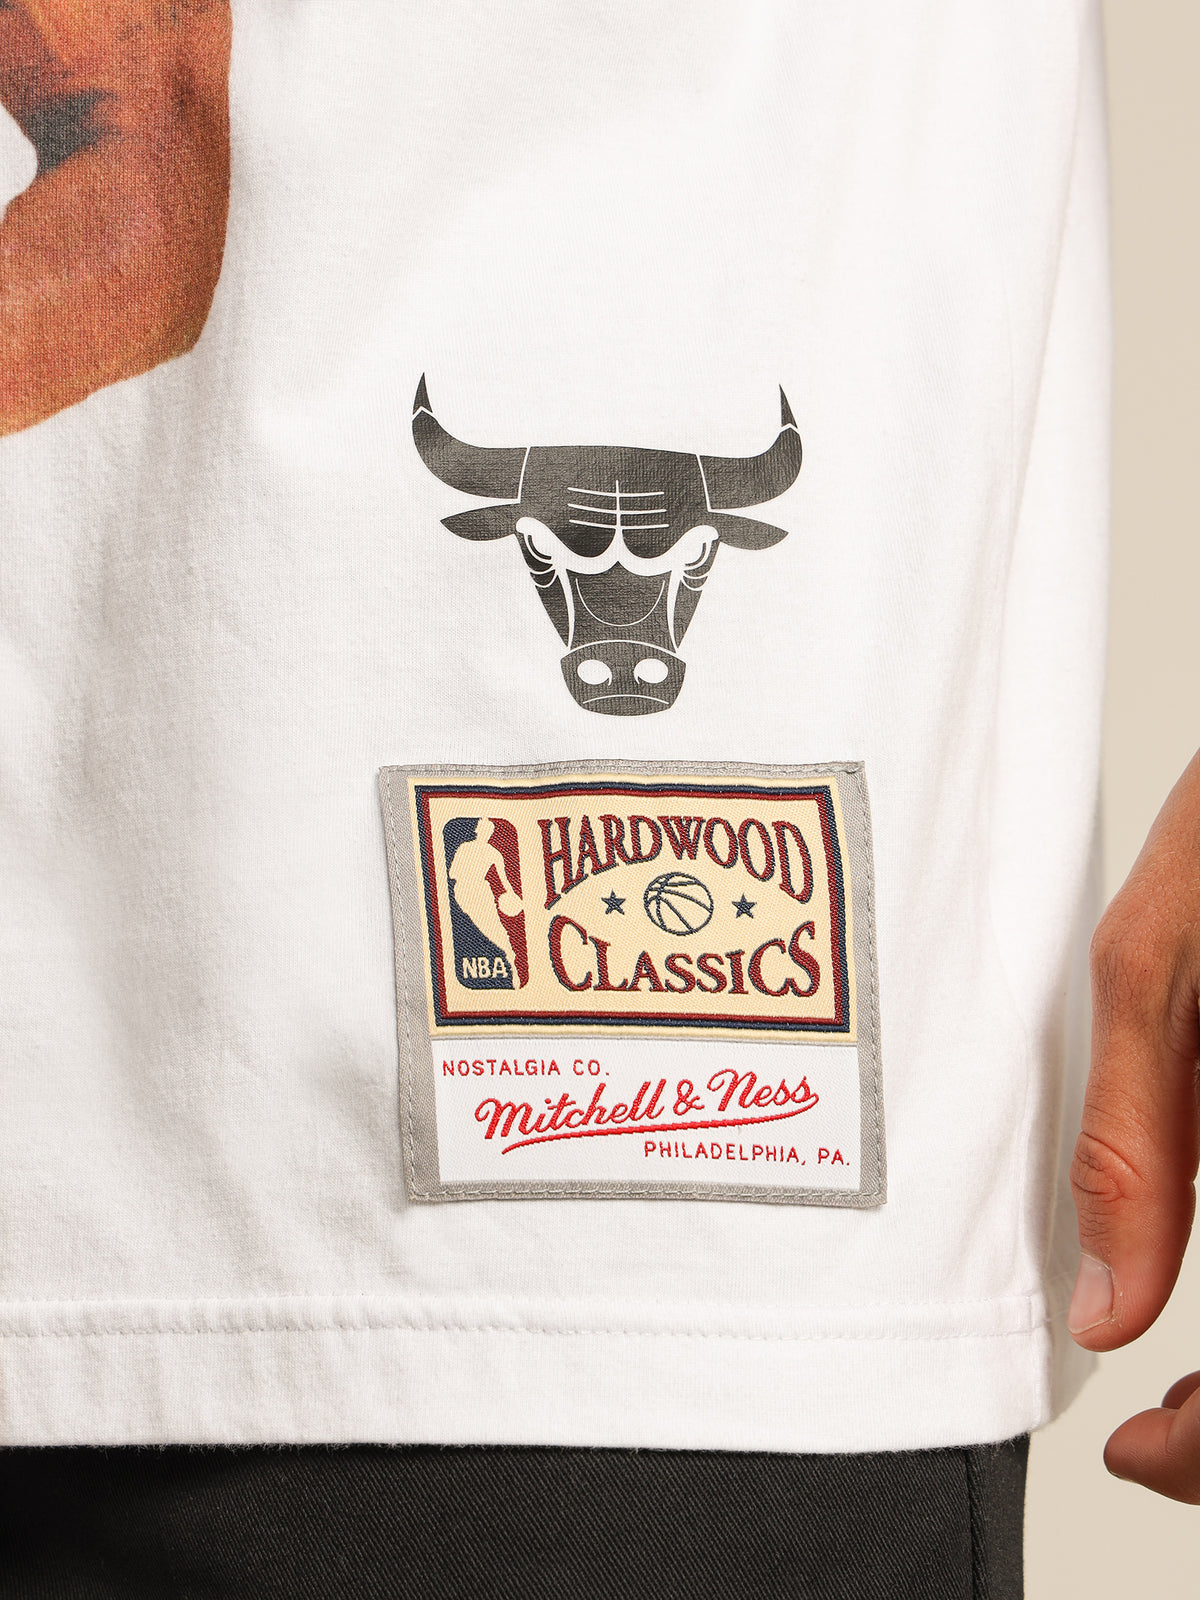 Chicago Bulls Dennis Rodman T-Shirt in White